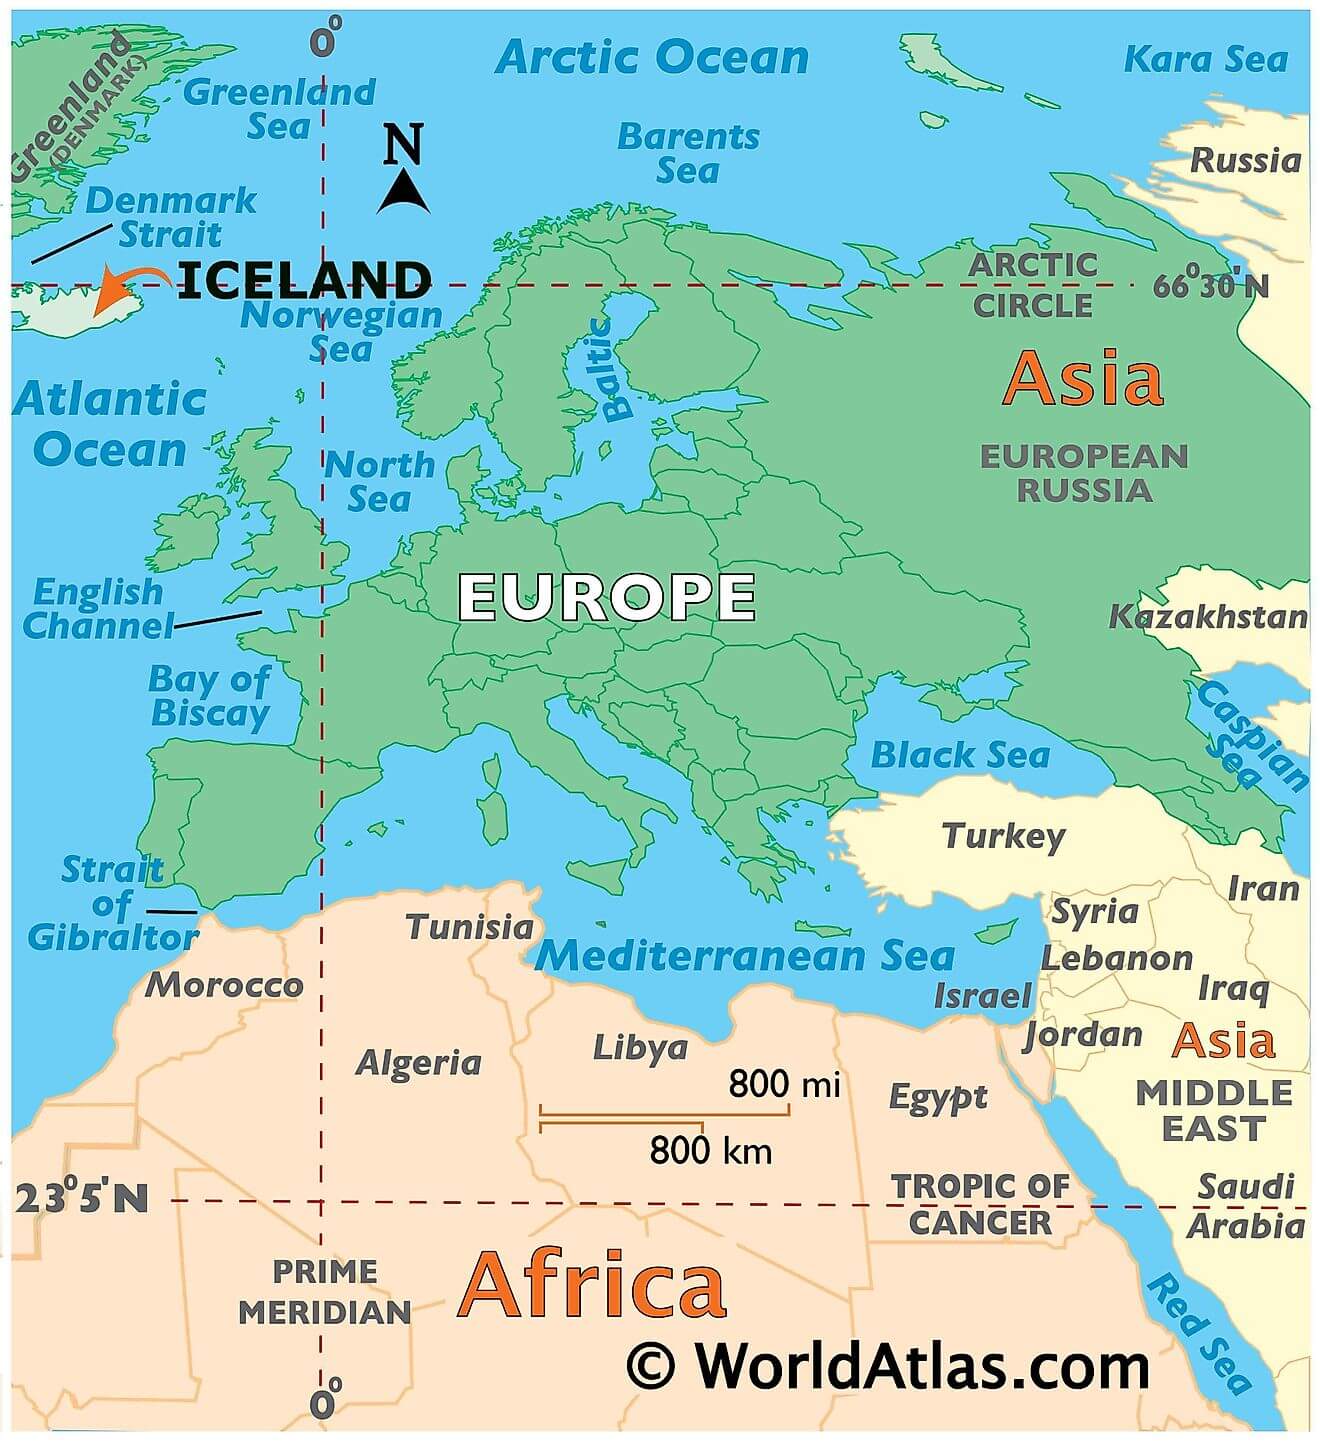 Iceland ở đâu?